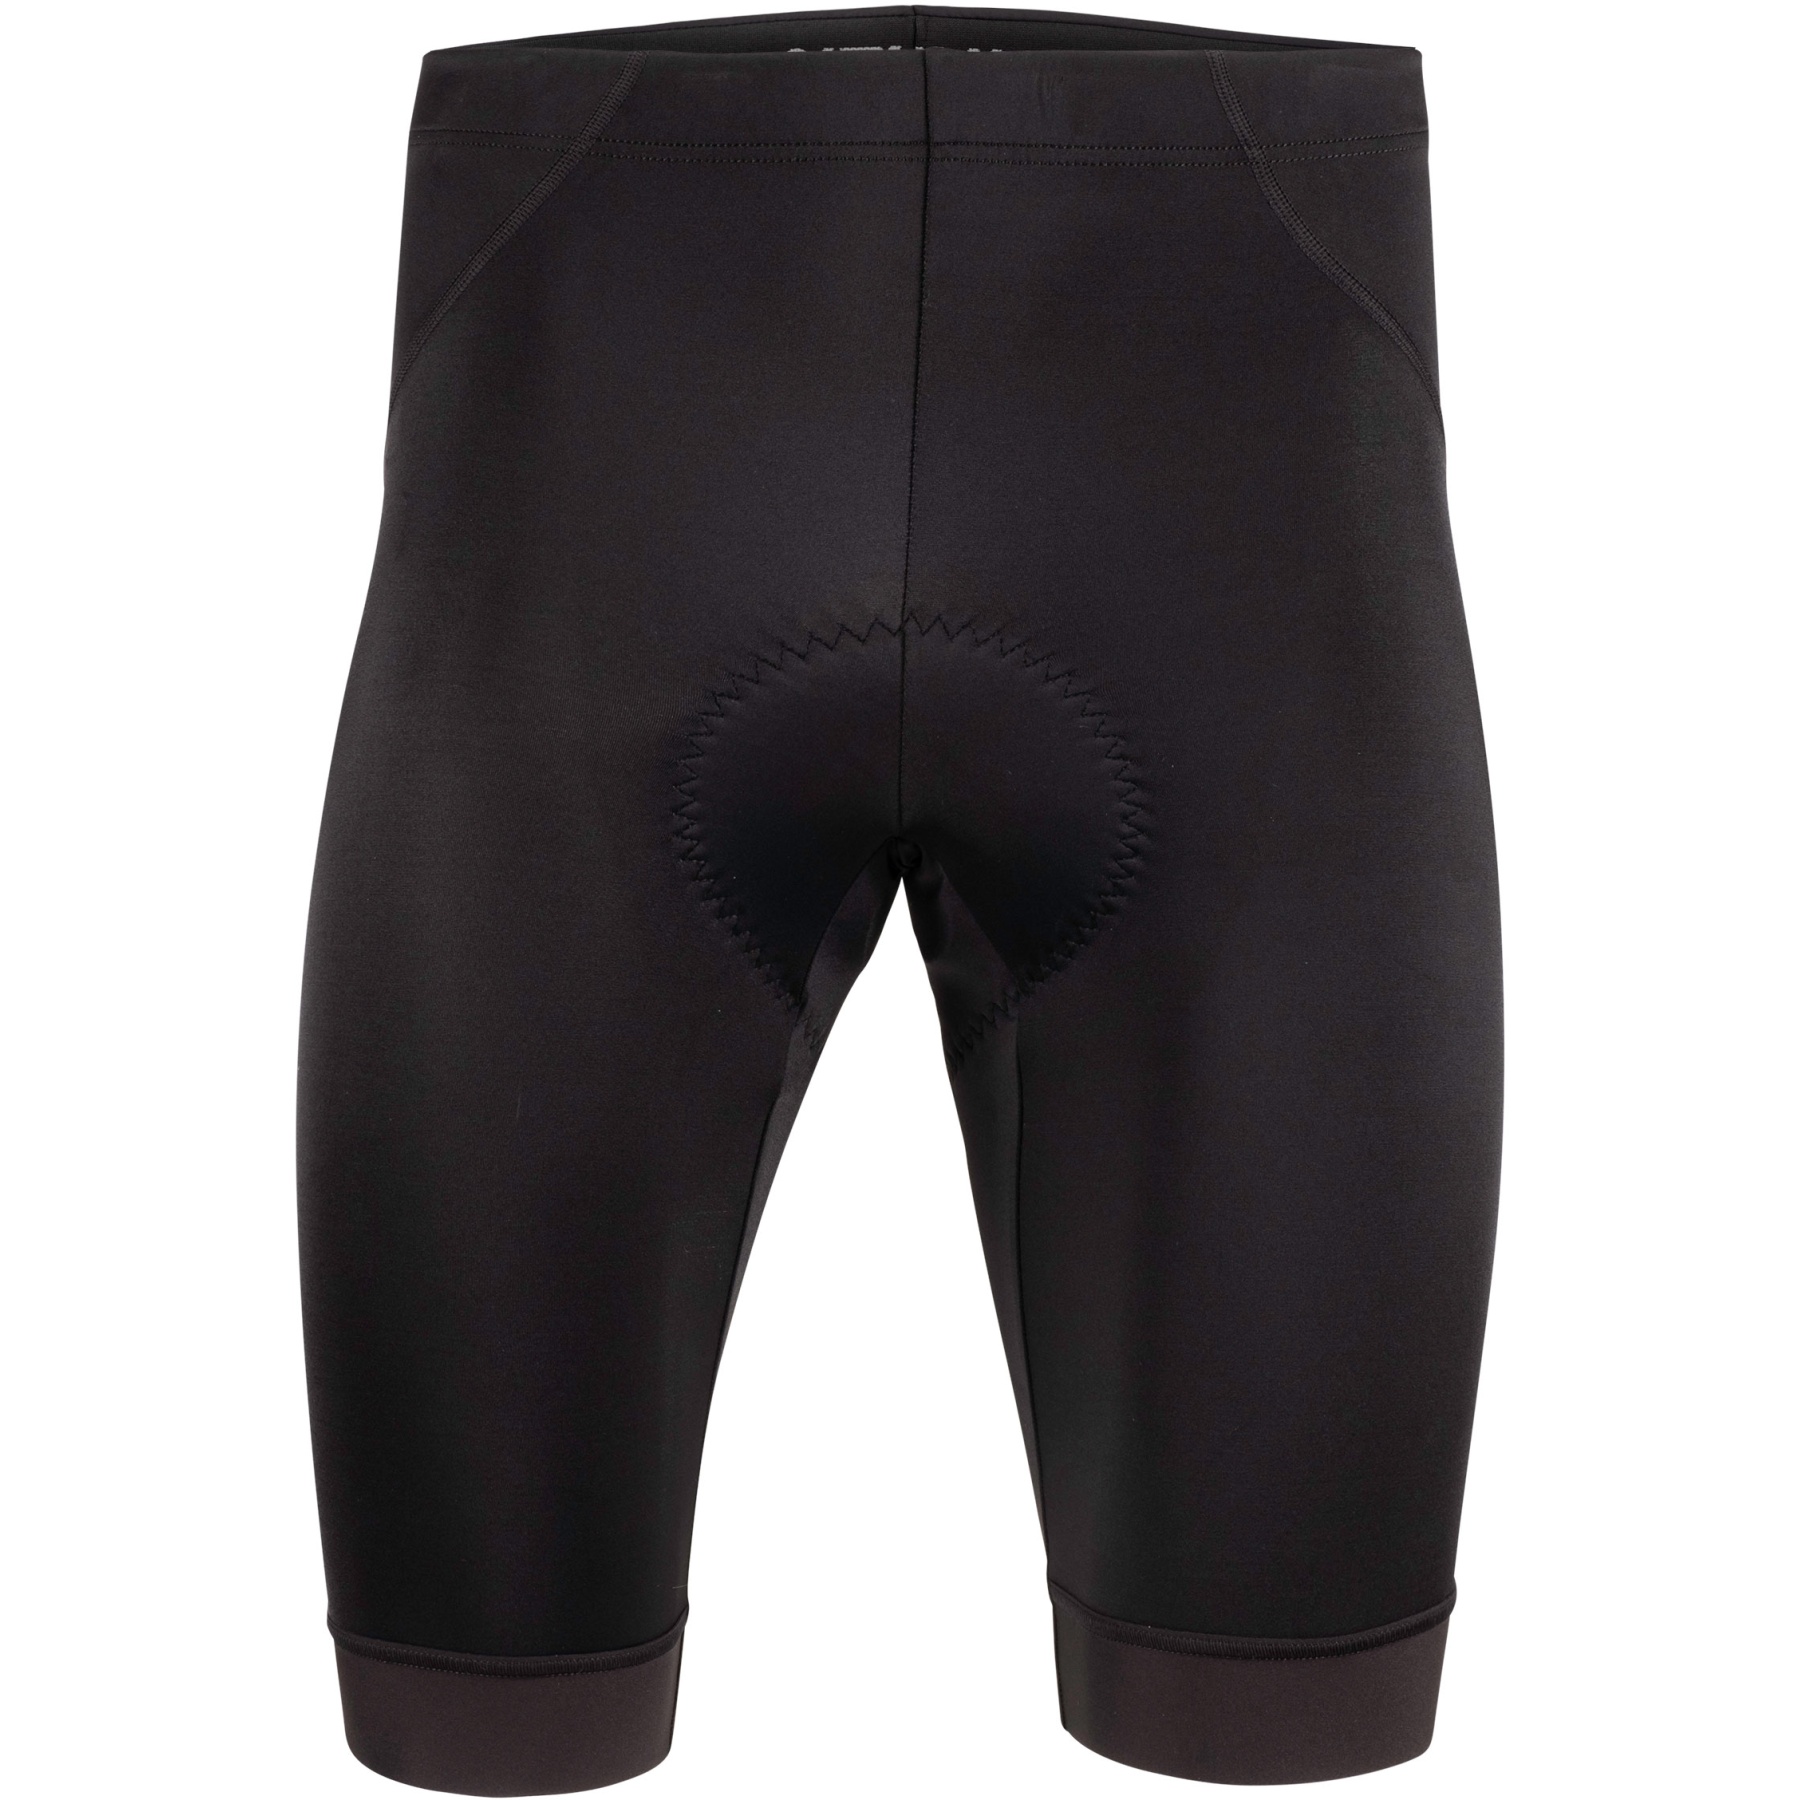 Productfoto van Nalini Bas Sporty Shorts - black 4000